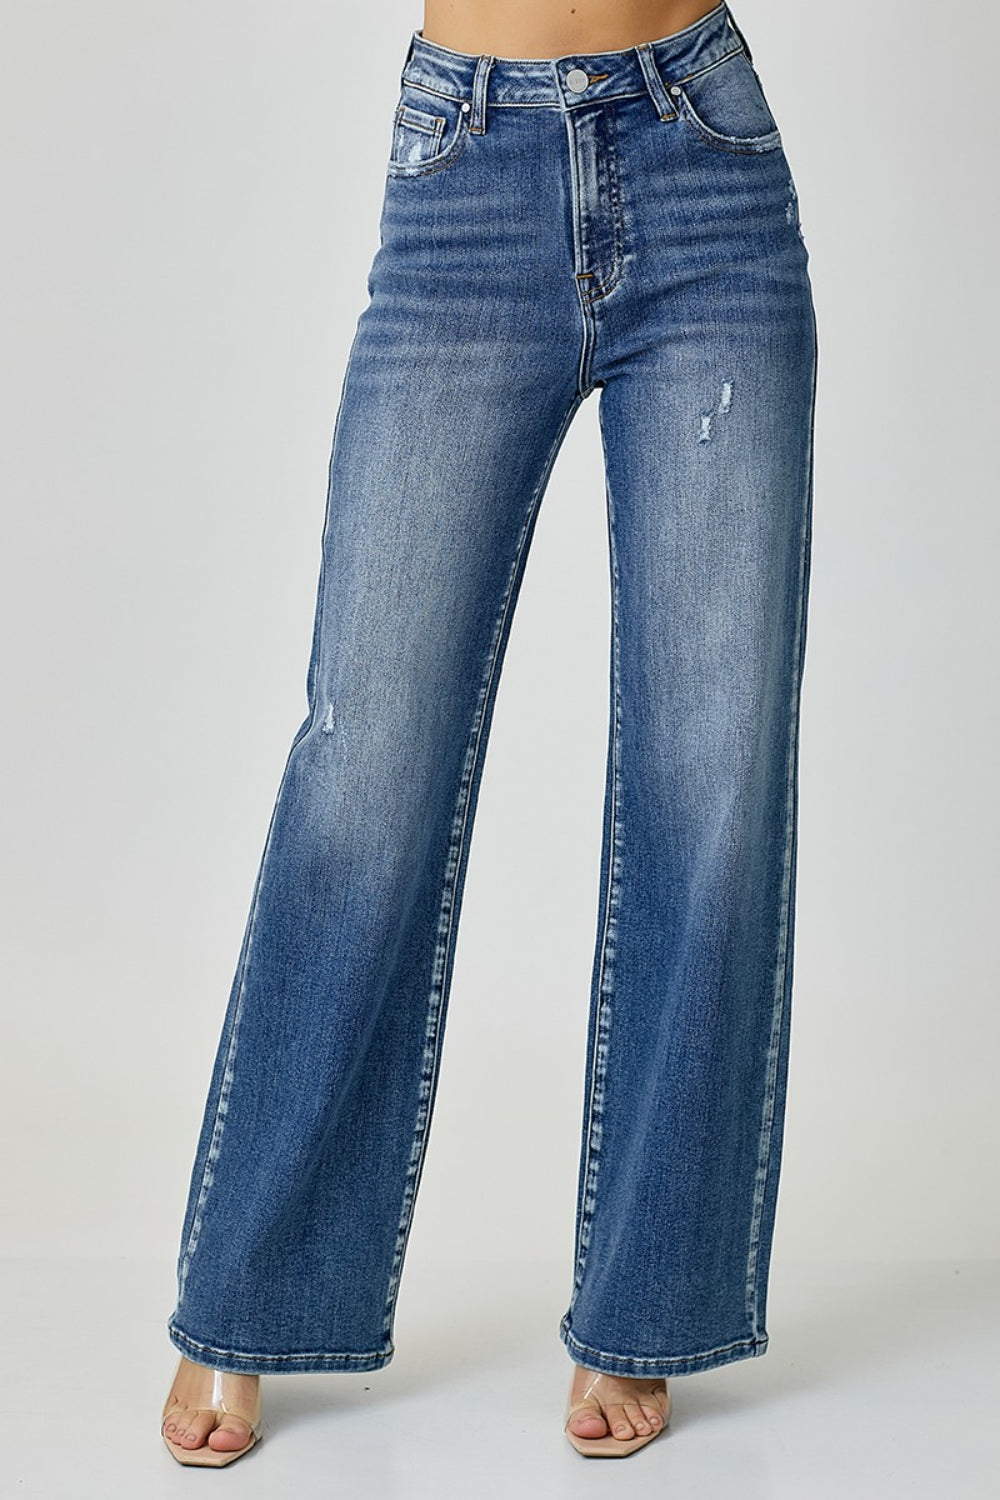 RISEN High Waist Wide Leg Jeans - Babbazon Camisole